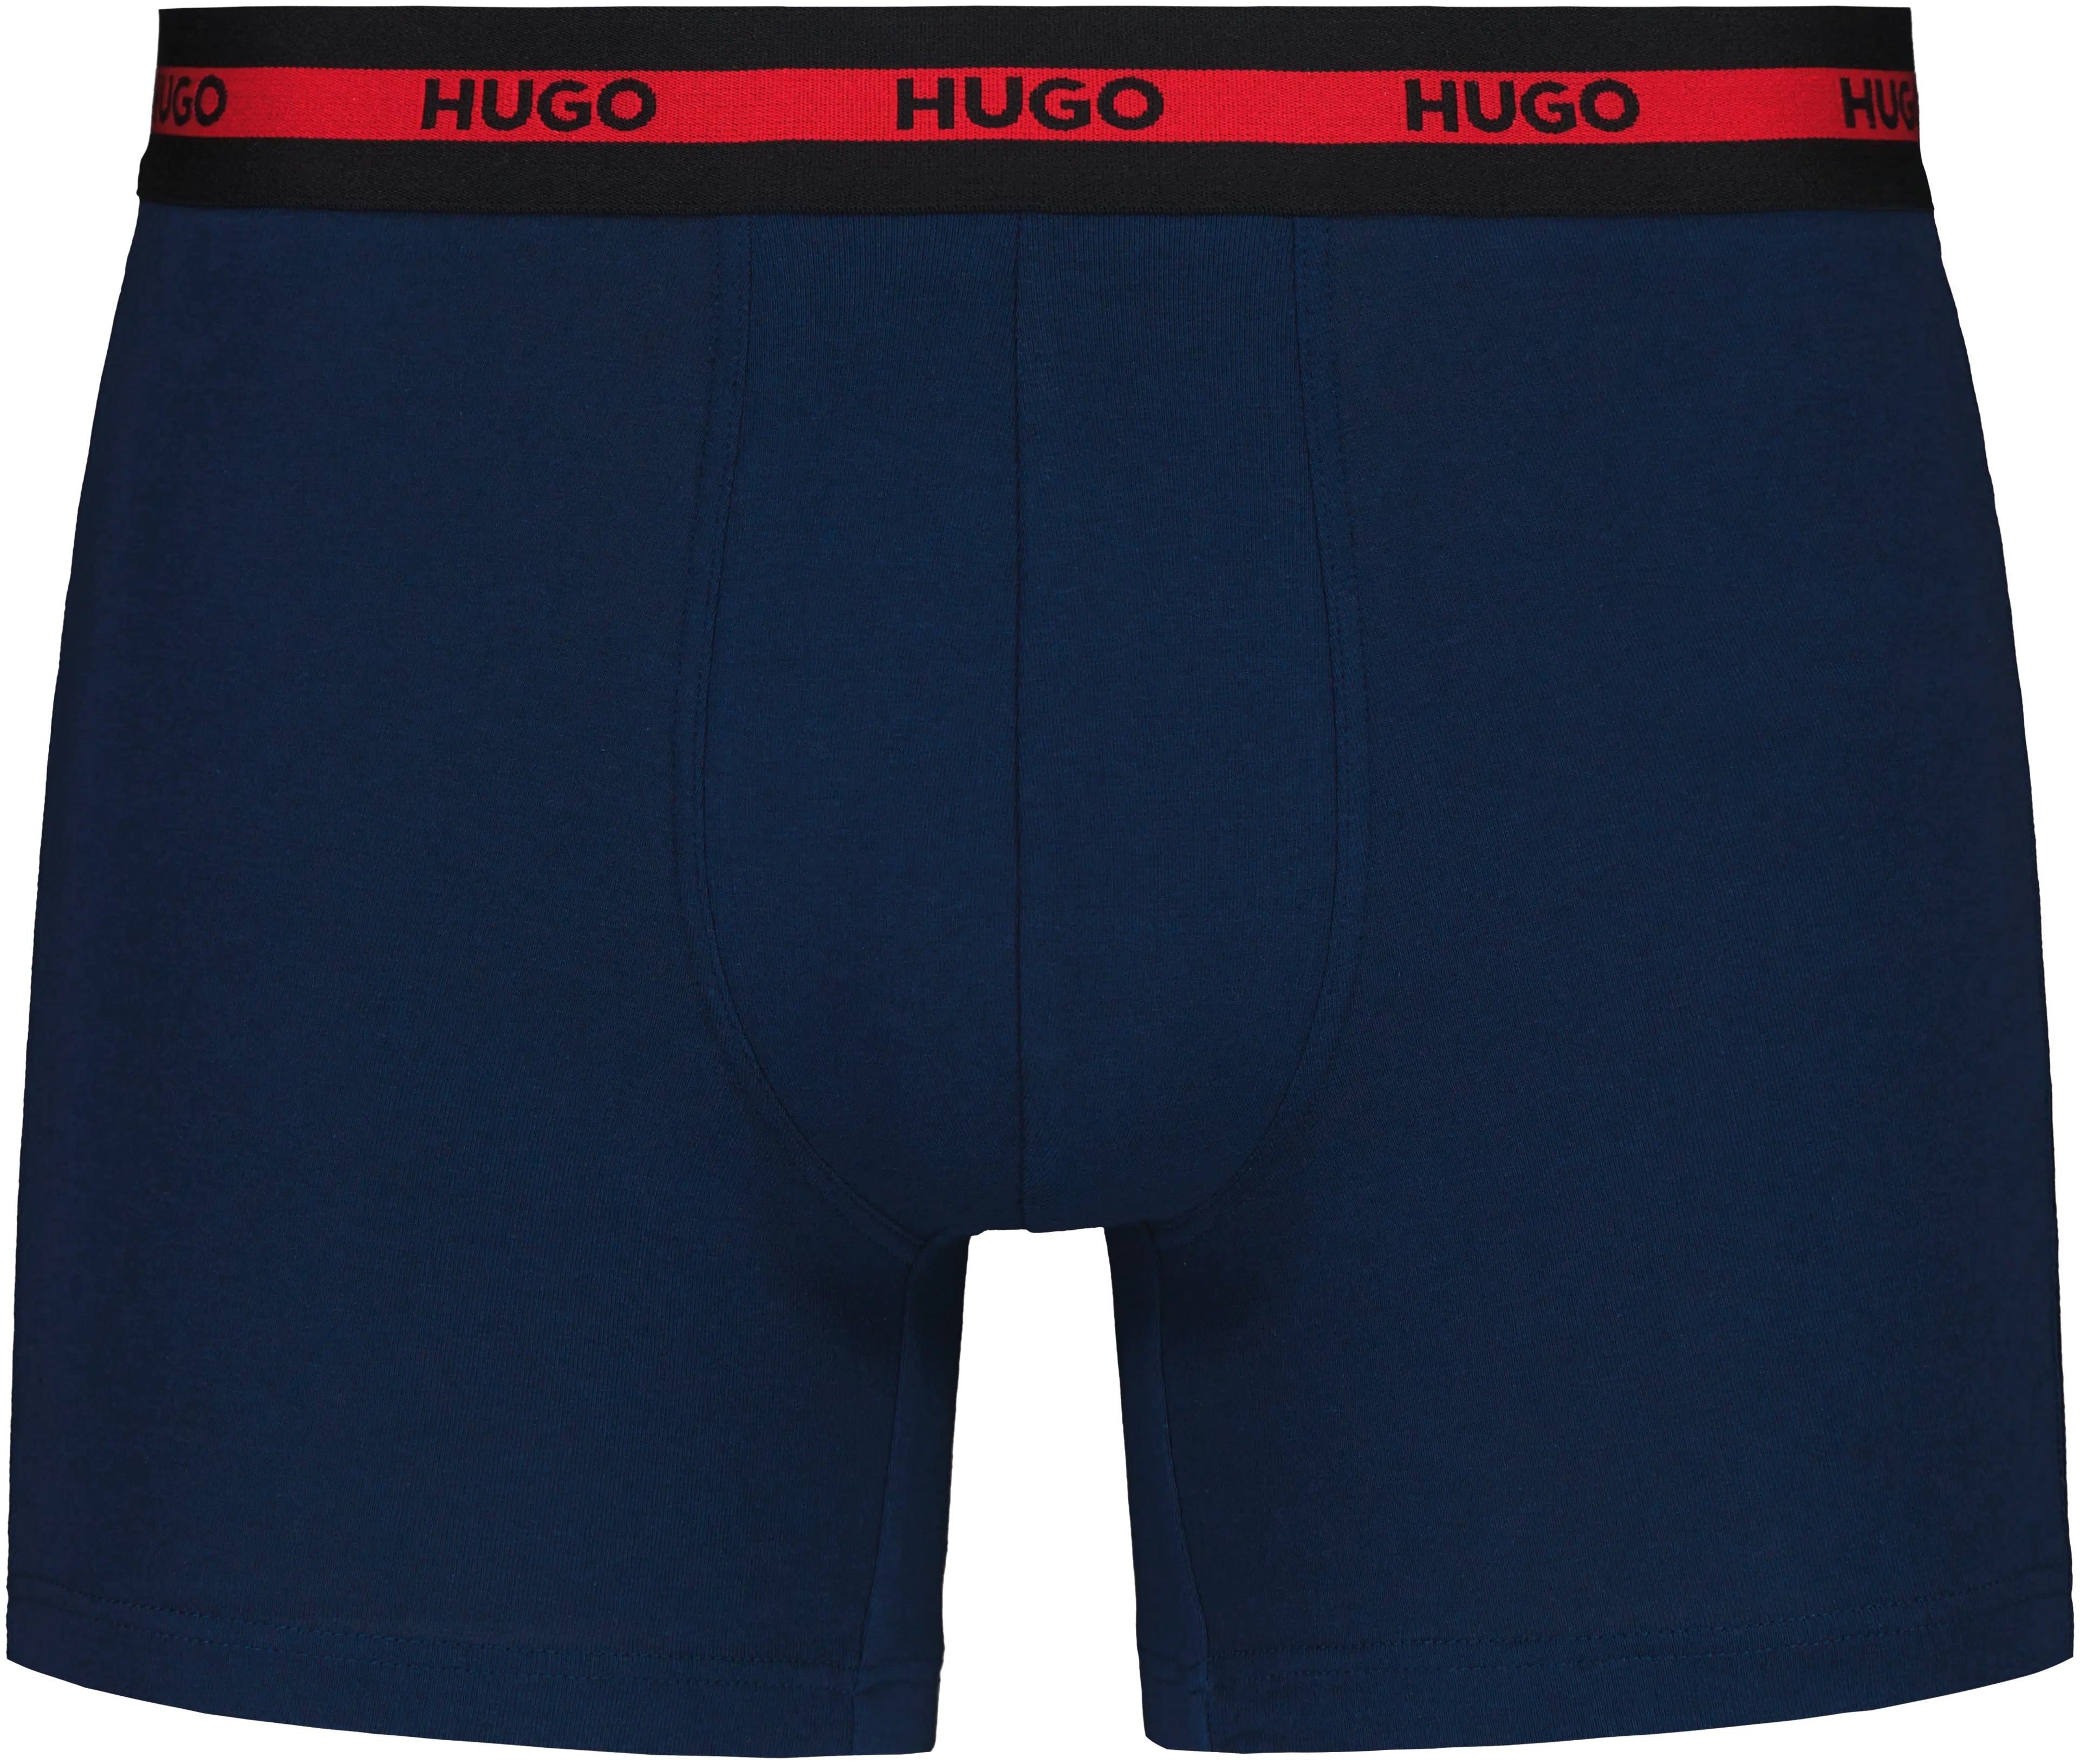 Hugo Boxerbr Triplet alushousut